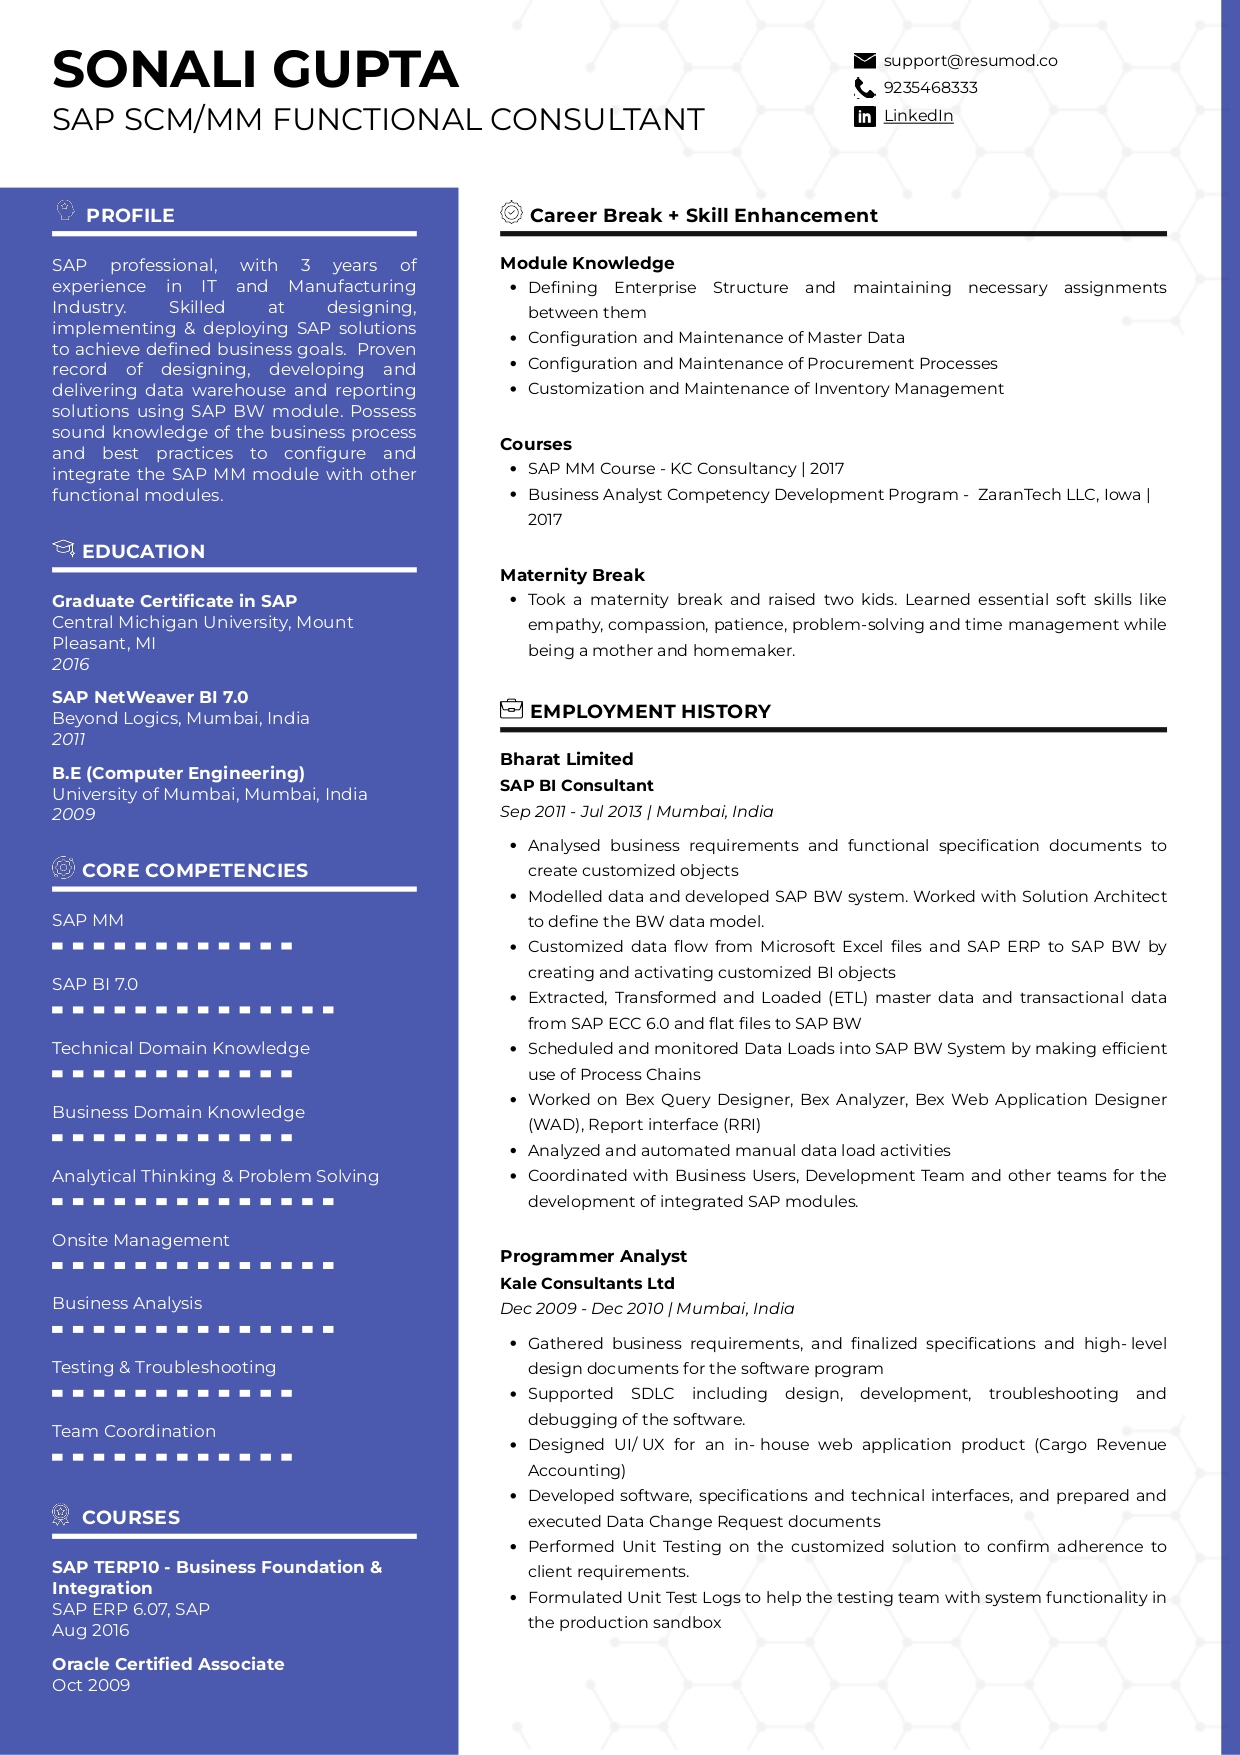 Sample Resume Skills of SAP SCM/MM Consultant with Career Break | Free Resume Templates & Samples on Resumod.co